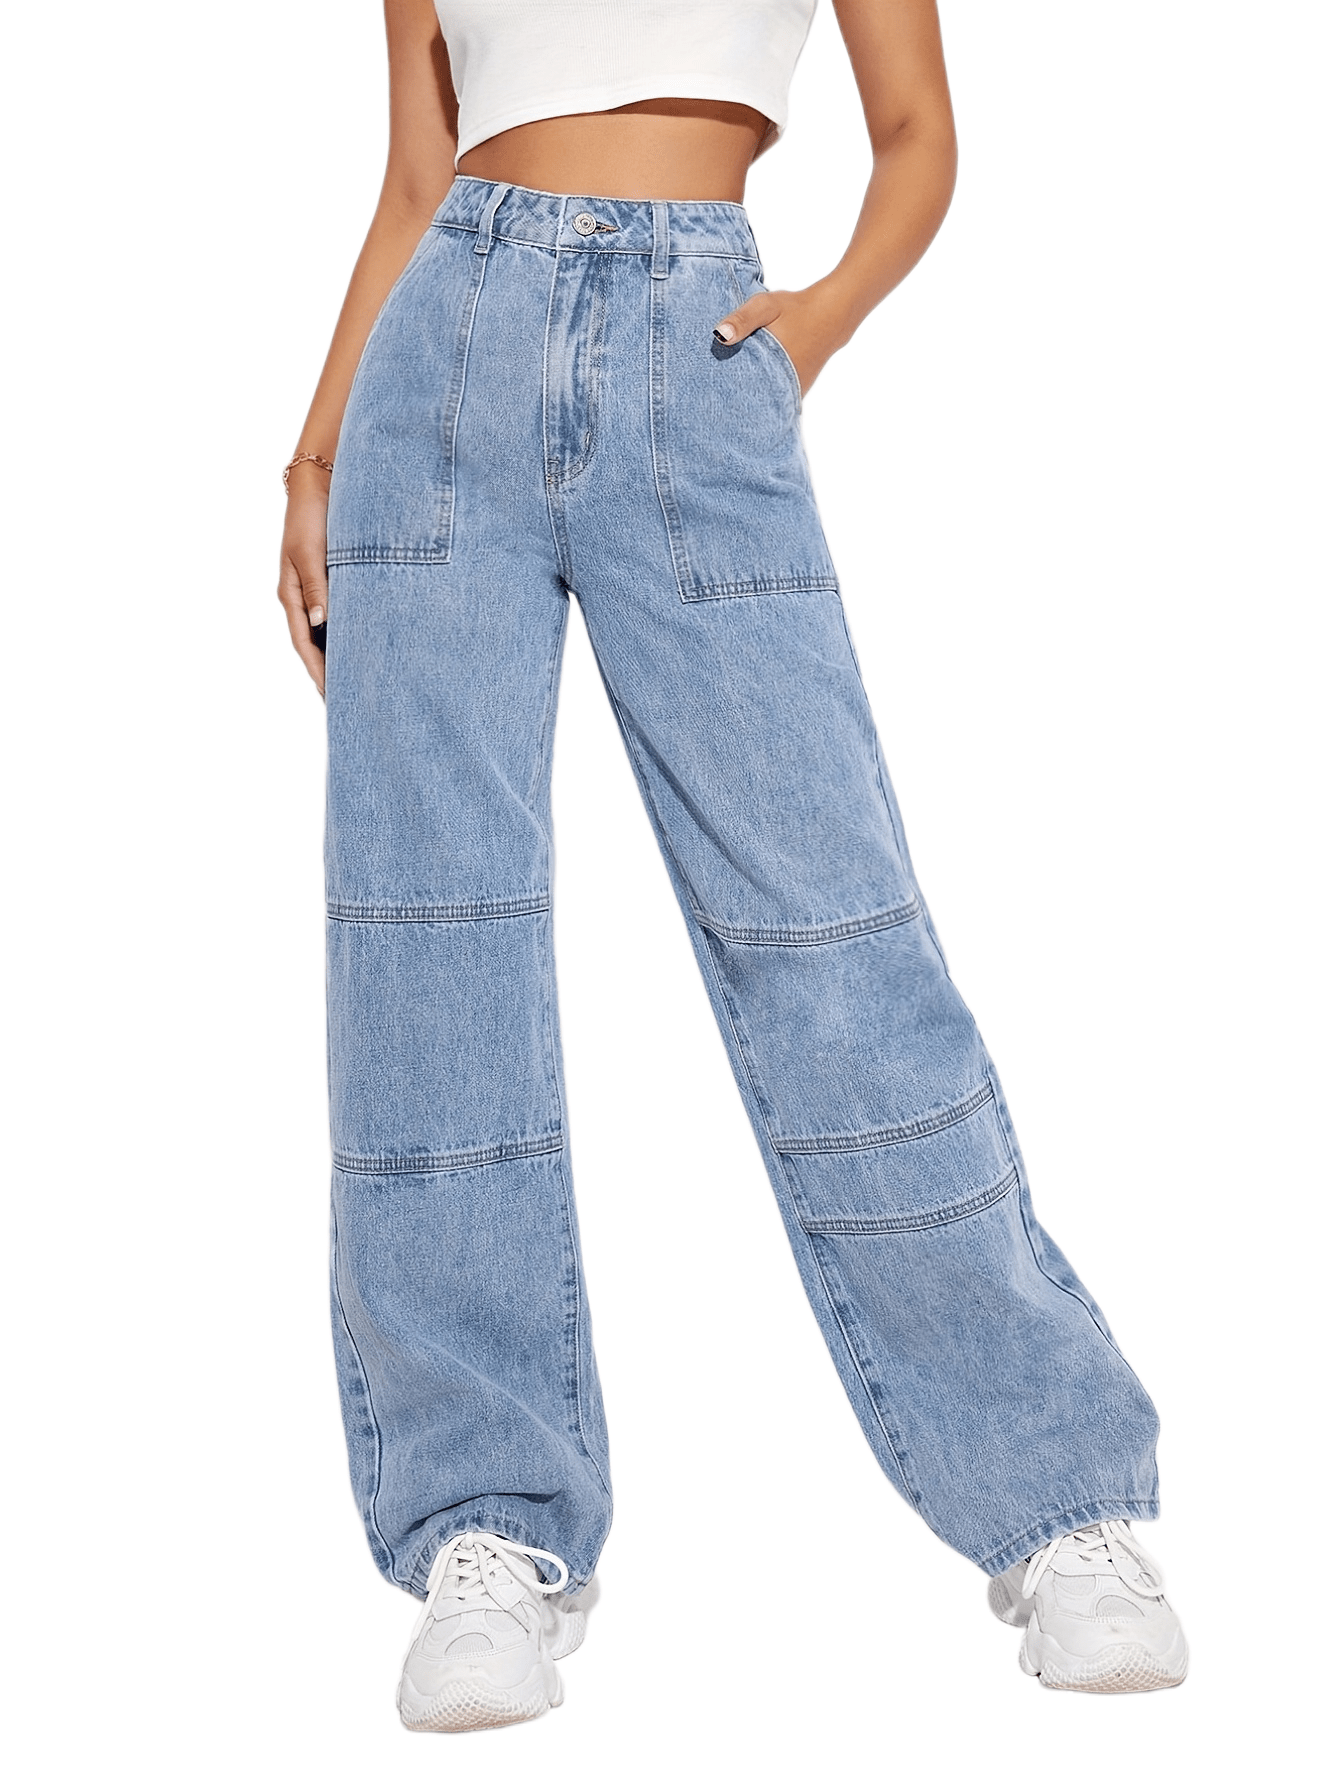 「lovevop」Blue Loose Fit Straight Jeans, Slash Pockets Non-Stretch Baggy Denim Pants, Women's Denim Jeans & Clothing